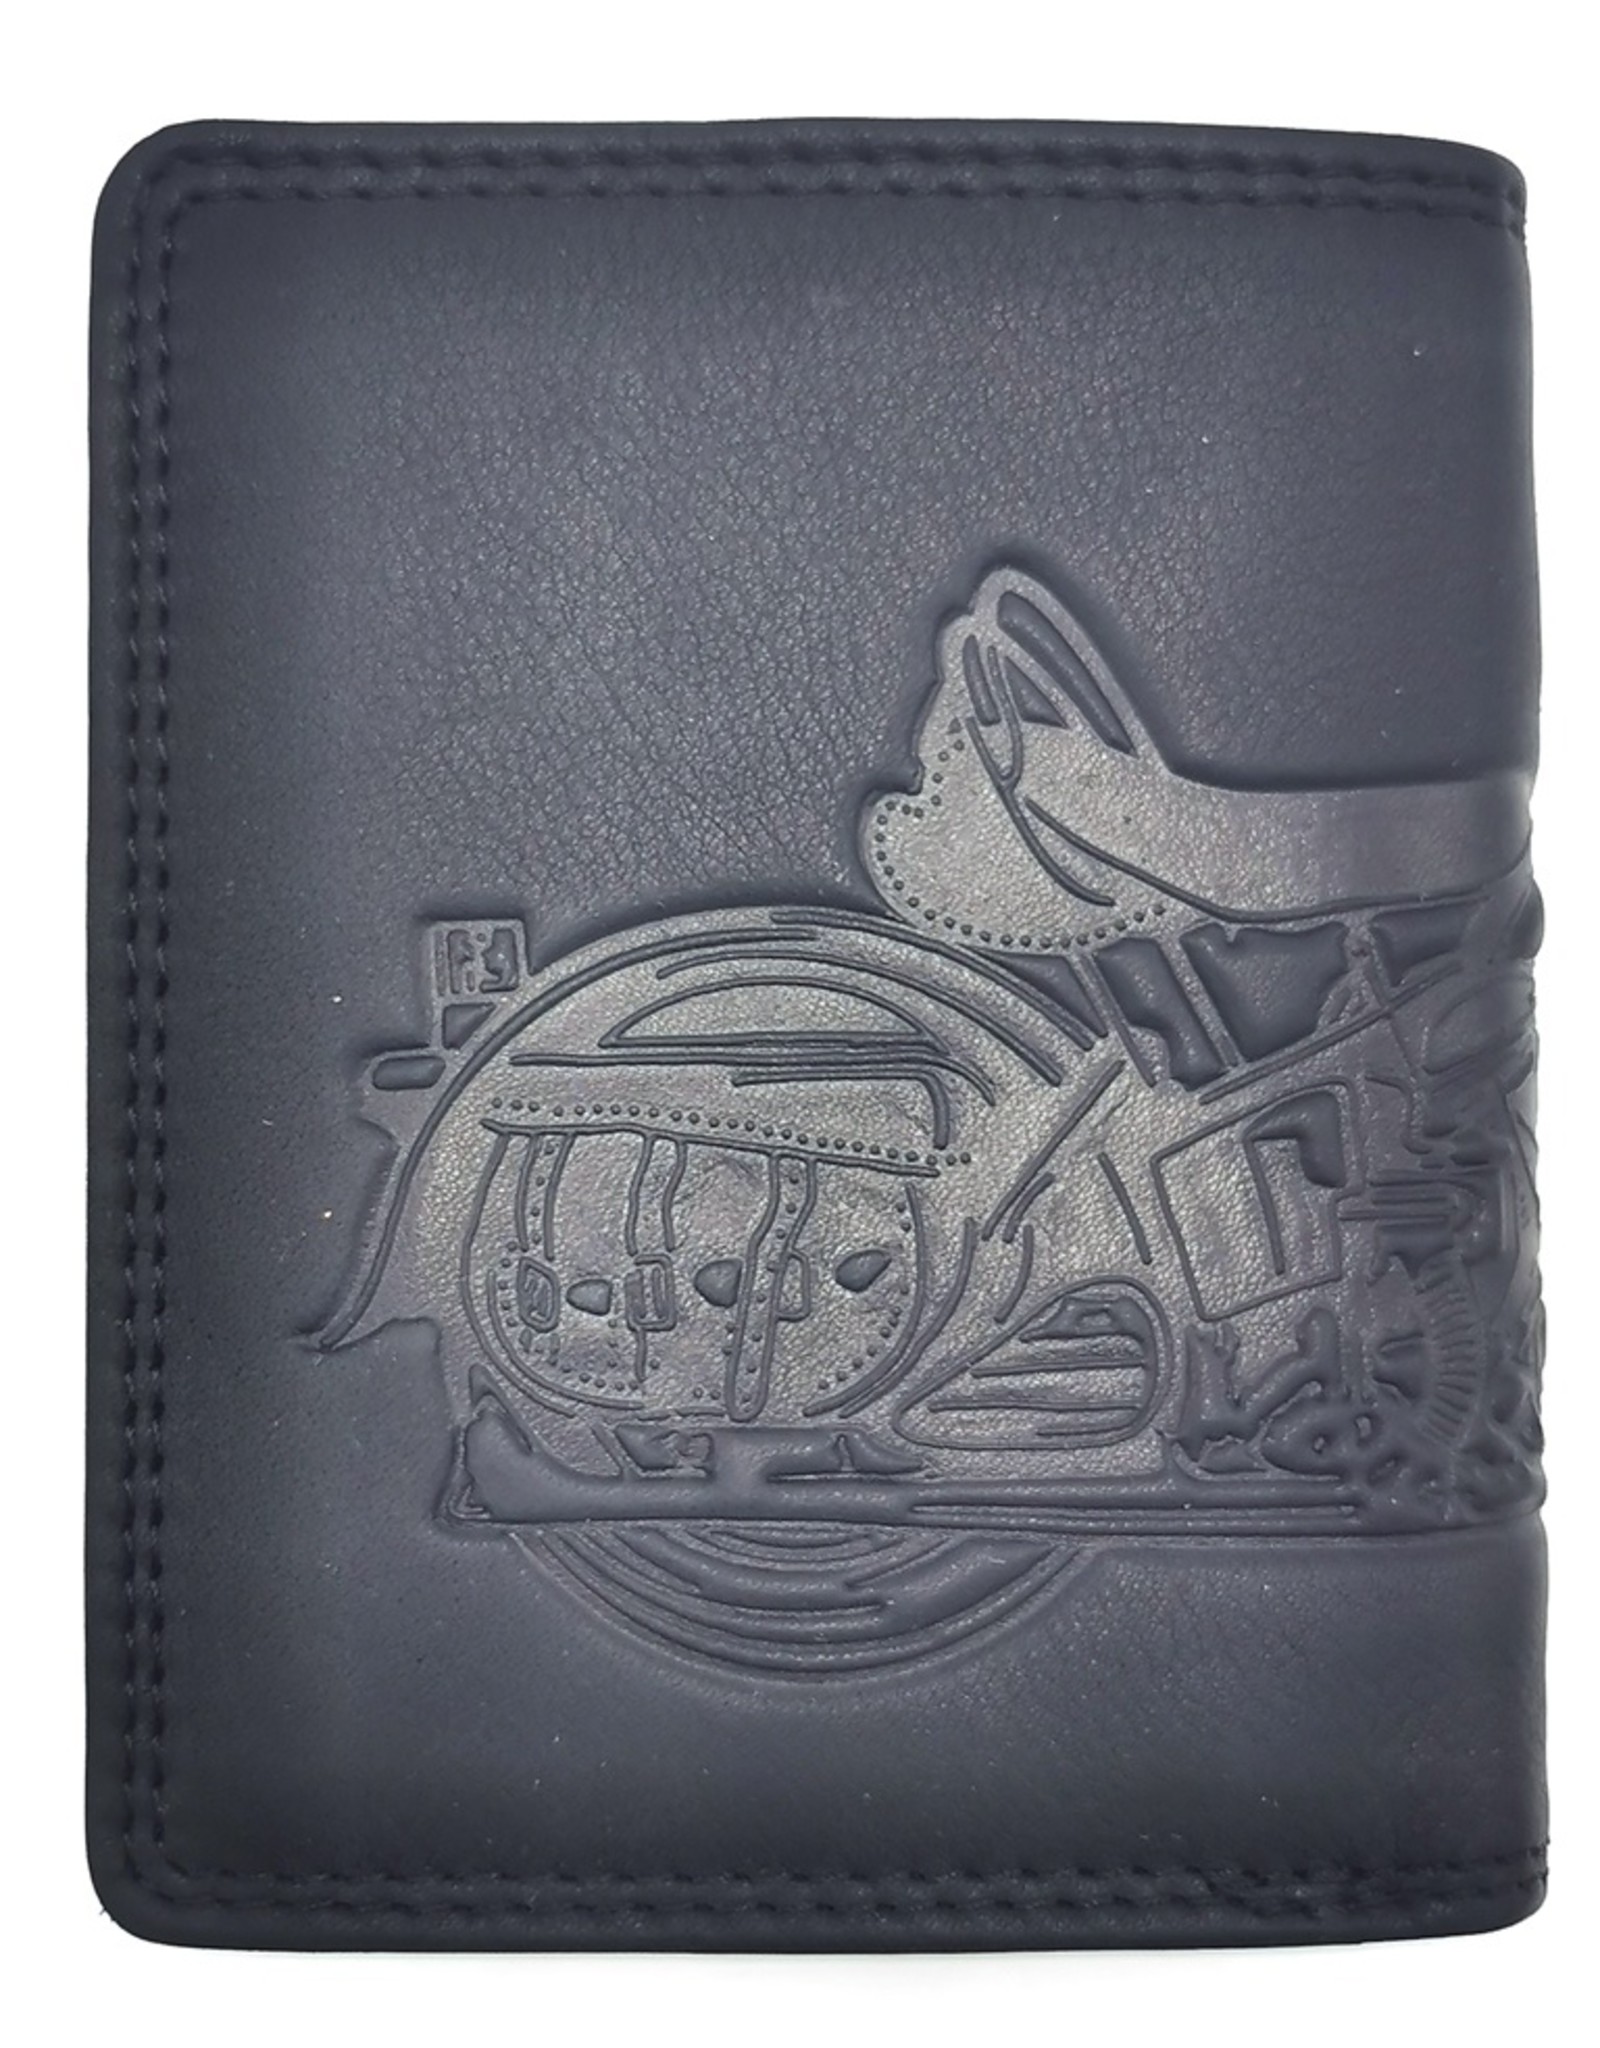 HillBurry Leather Wallets - HillBurry Leather wallet with embossed motorbike black